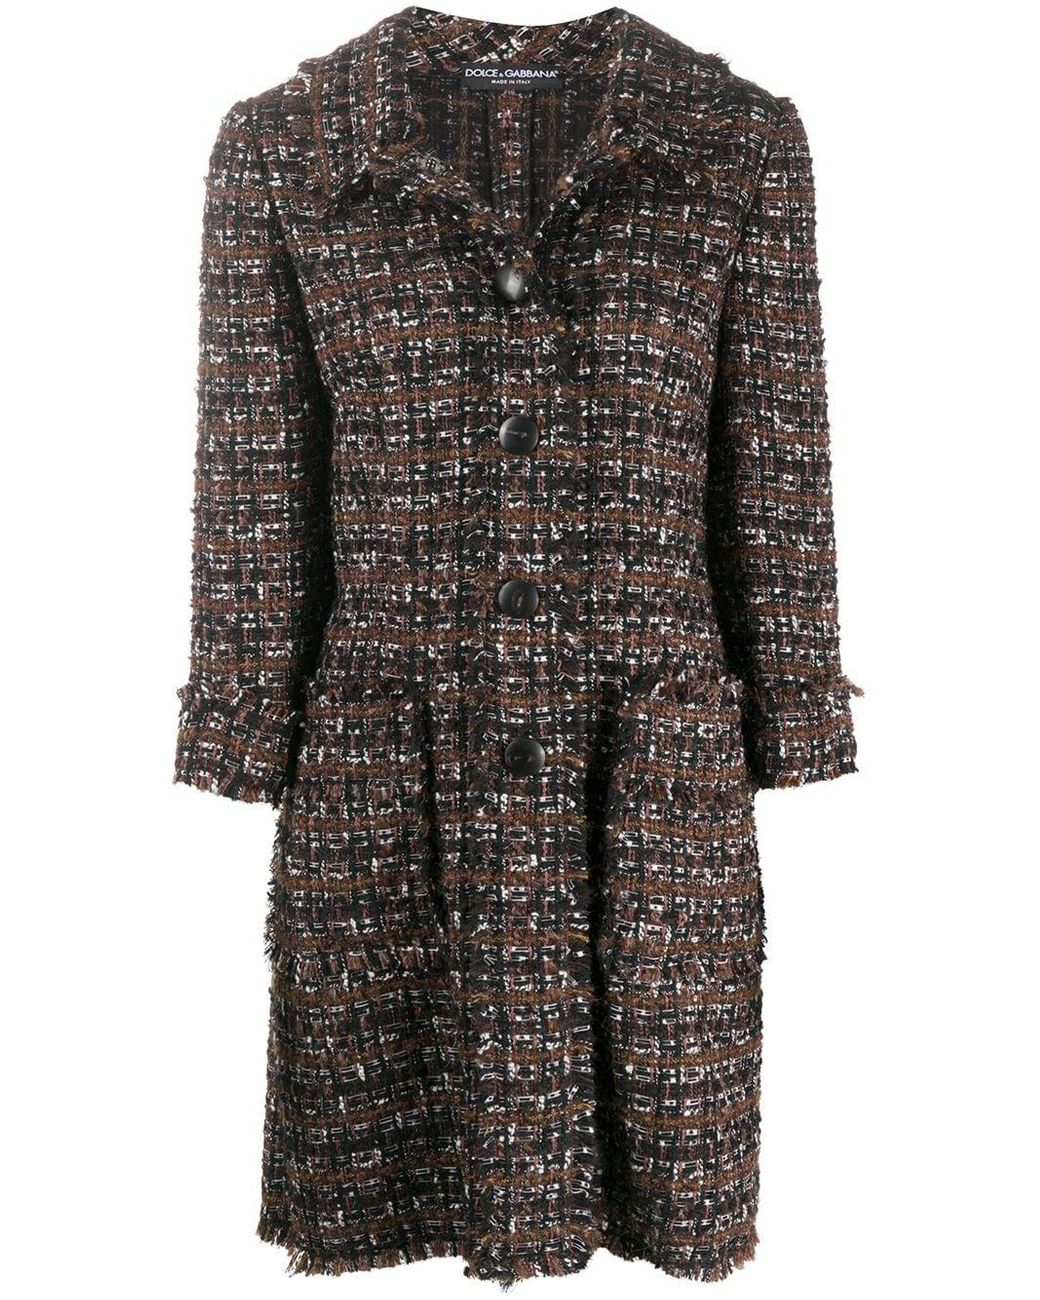 Dolce & Gabbana Tweed Mid-length Coat in Brown - Lyst